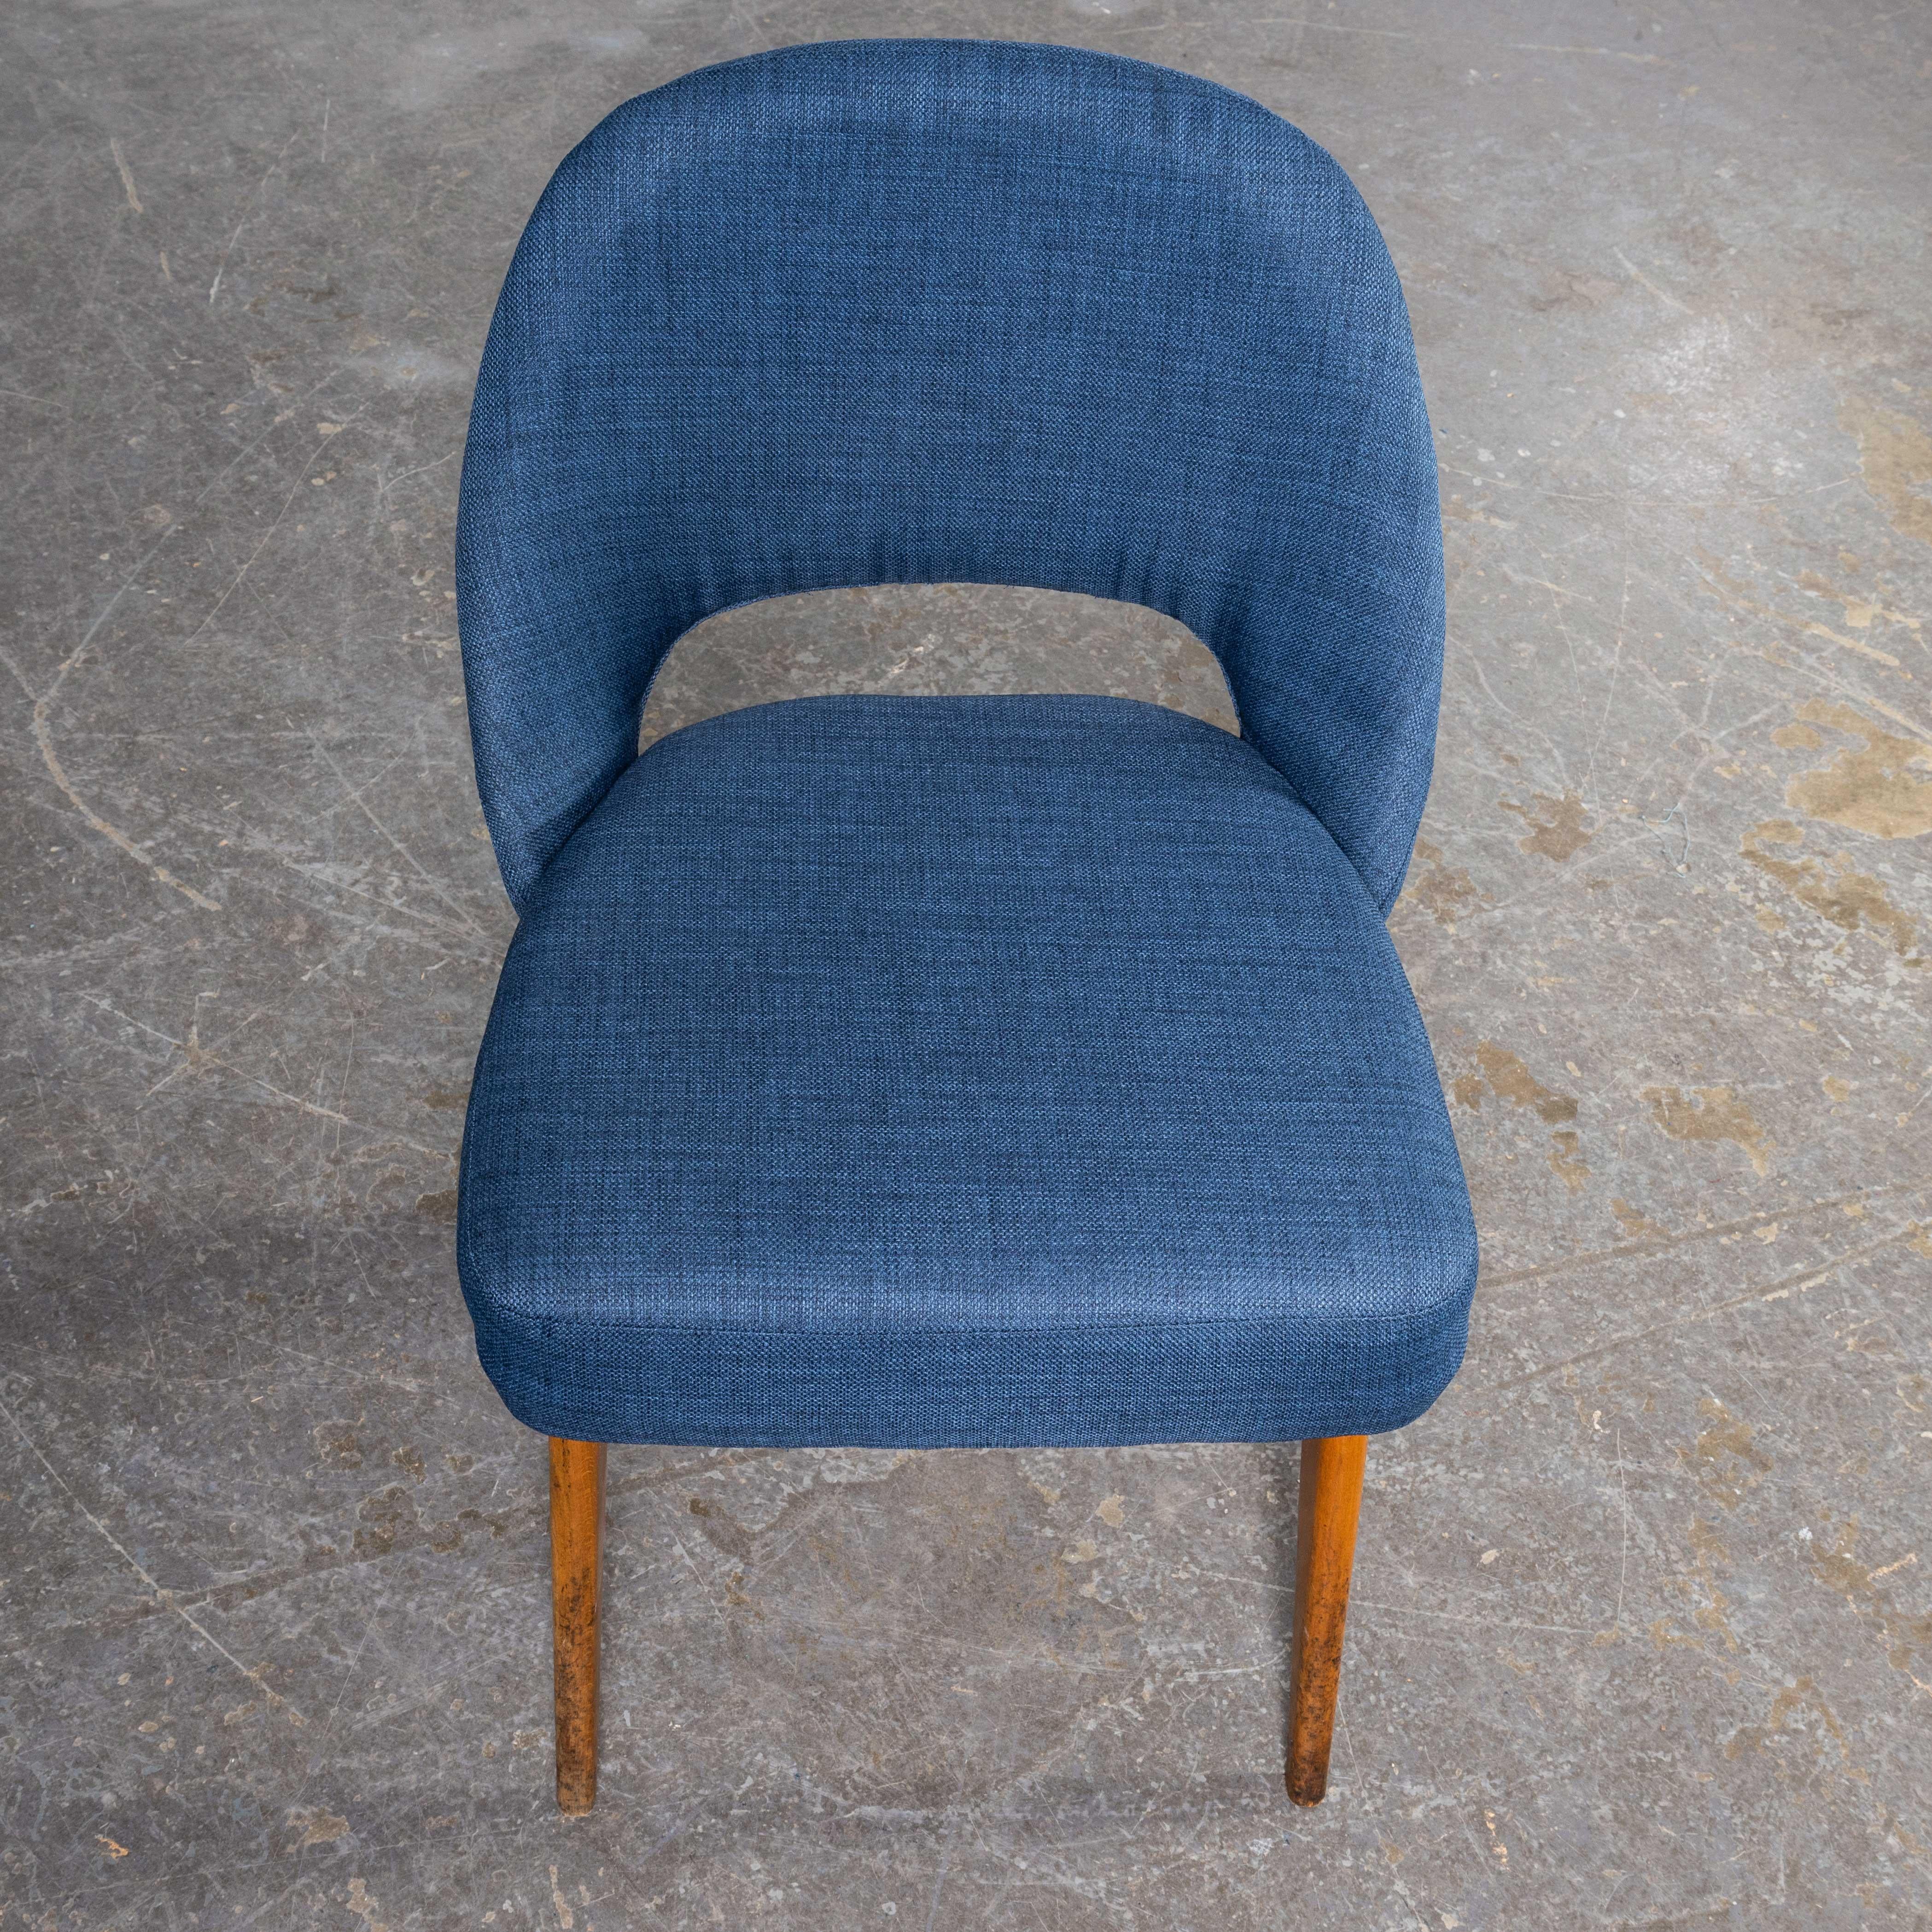 1960's Original gepolsterte Ben Chairs - Gute Menge verfügbar im Angebot 7